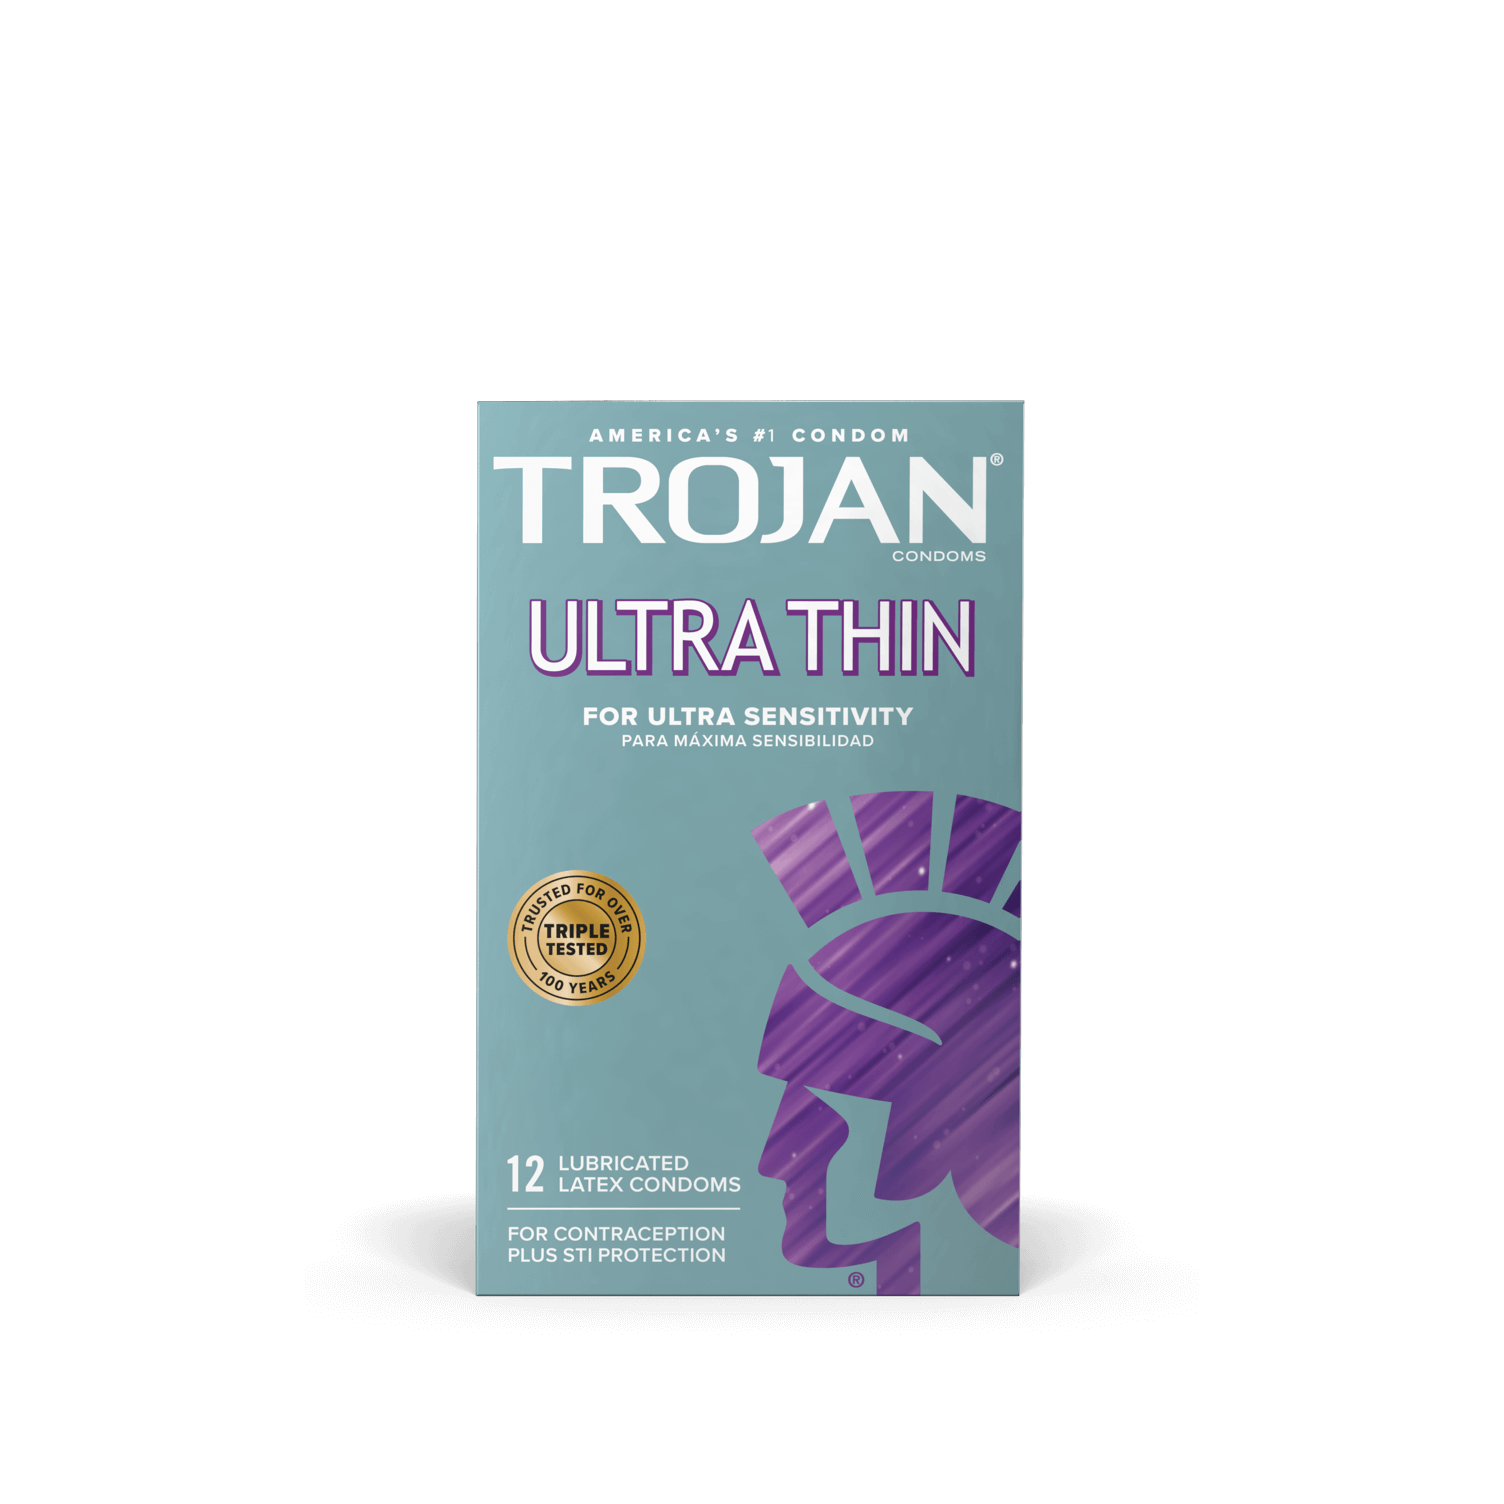 Trojan Ultra Thin Lubricated Condoms.